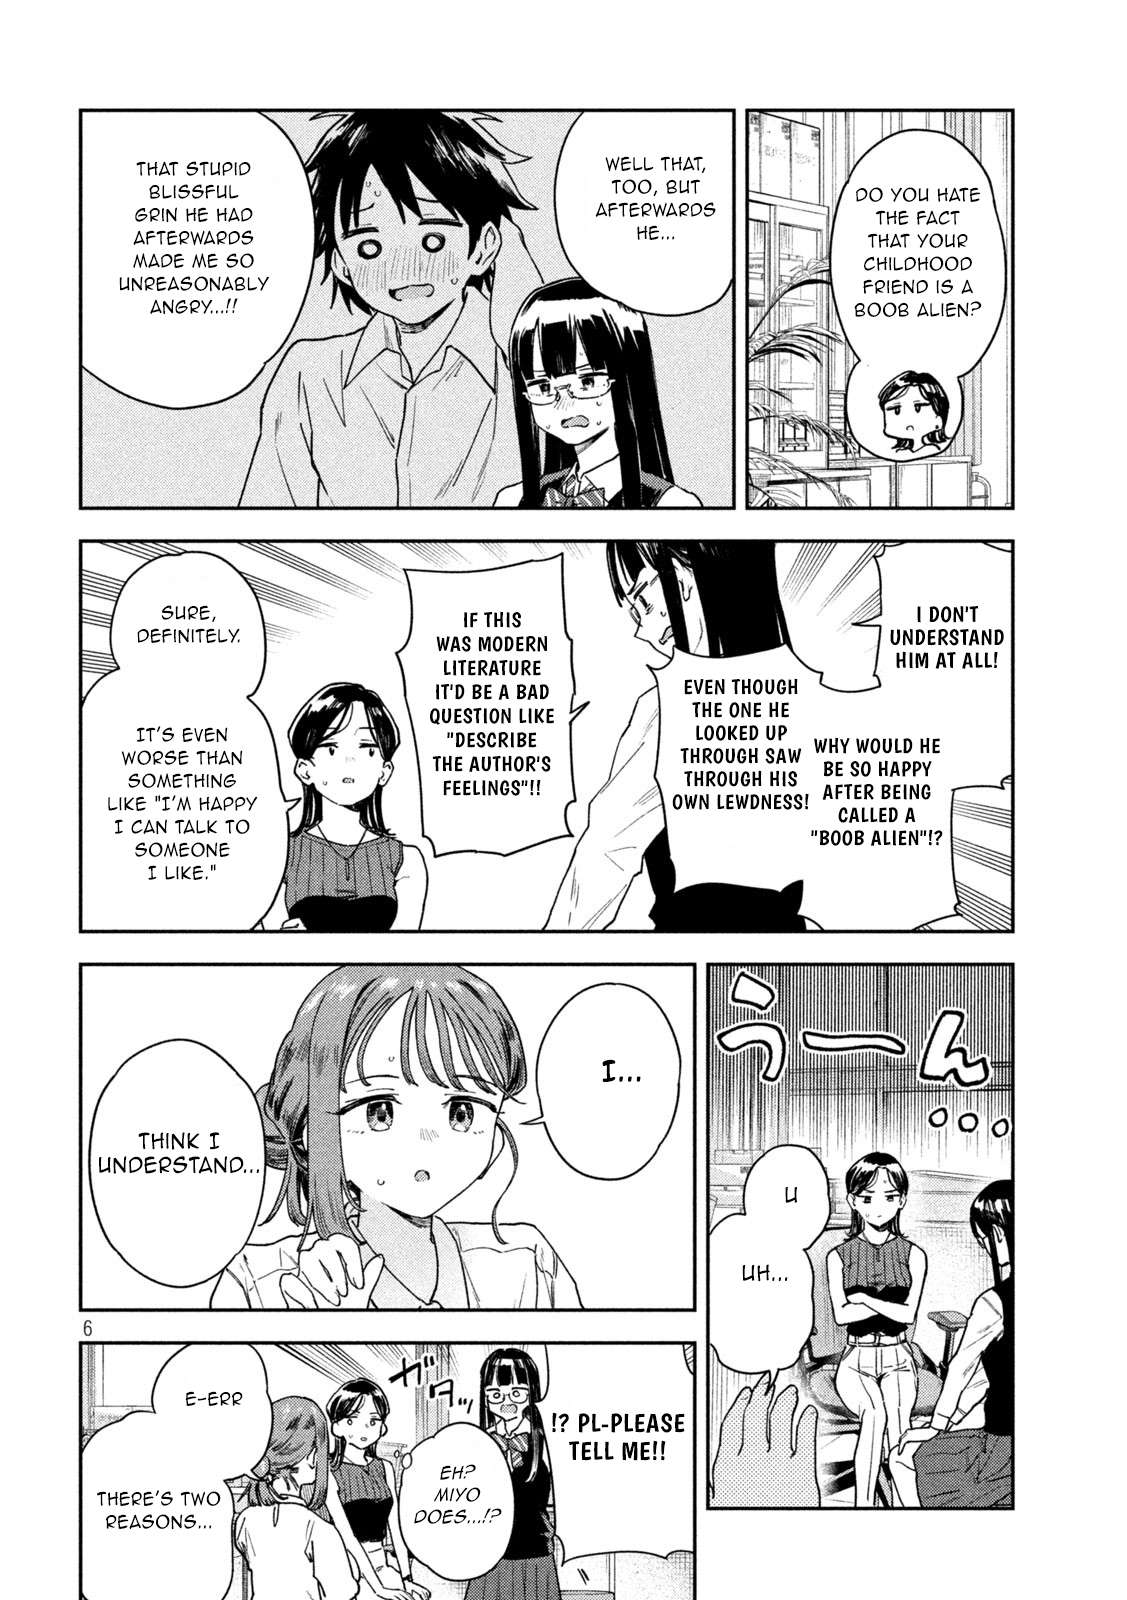 Miyo-Chan Sensei Said So - chapter 11 - #6